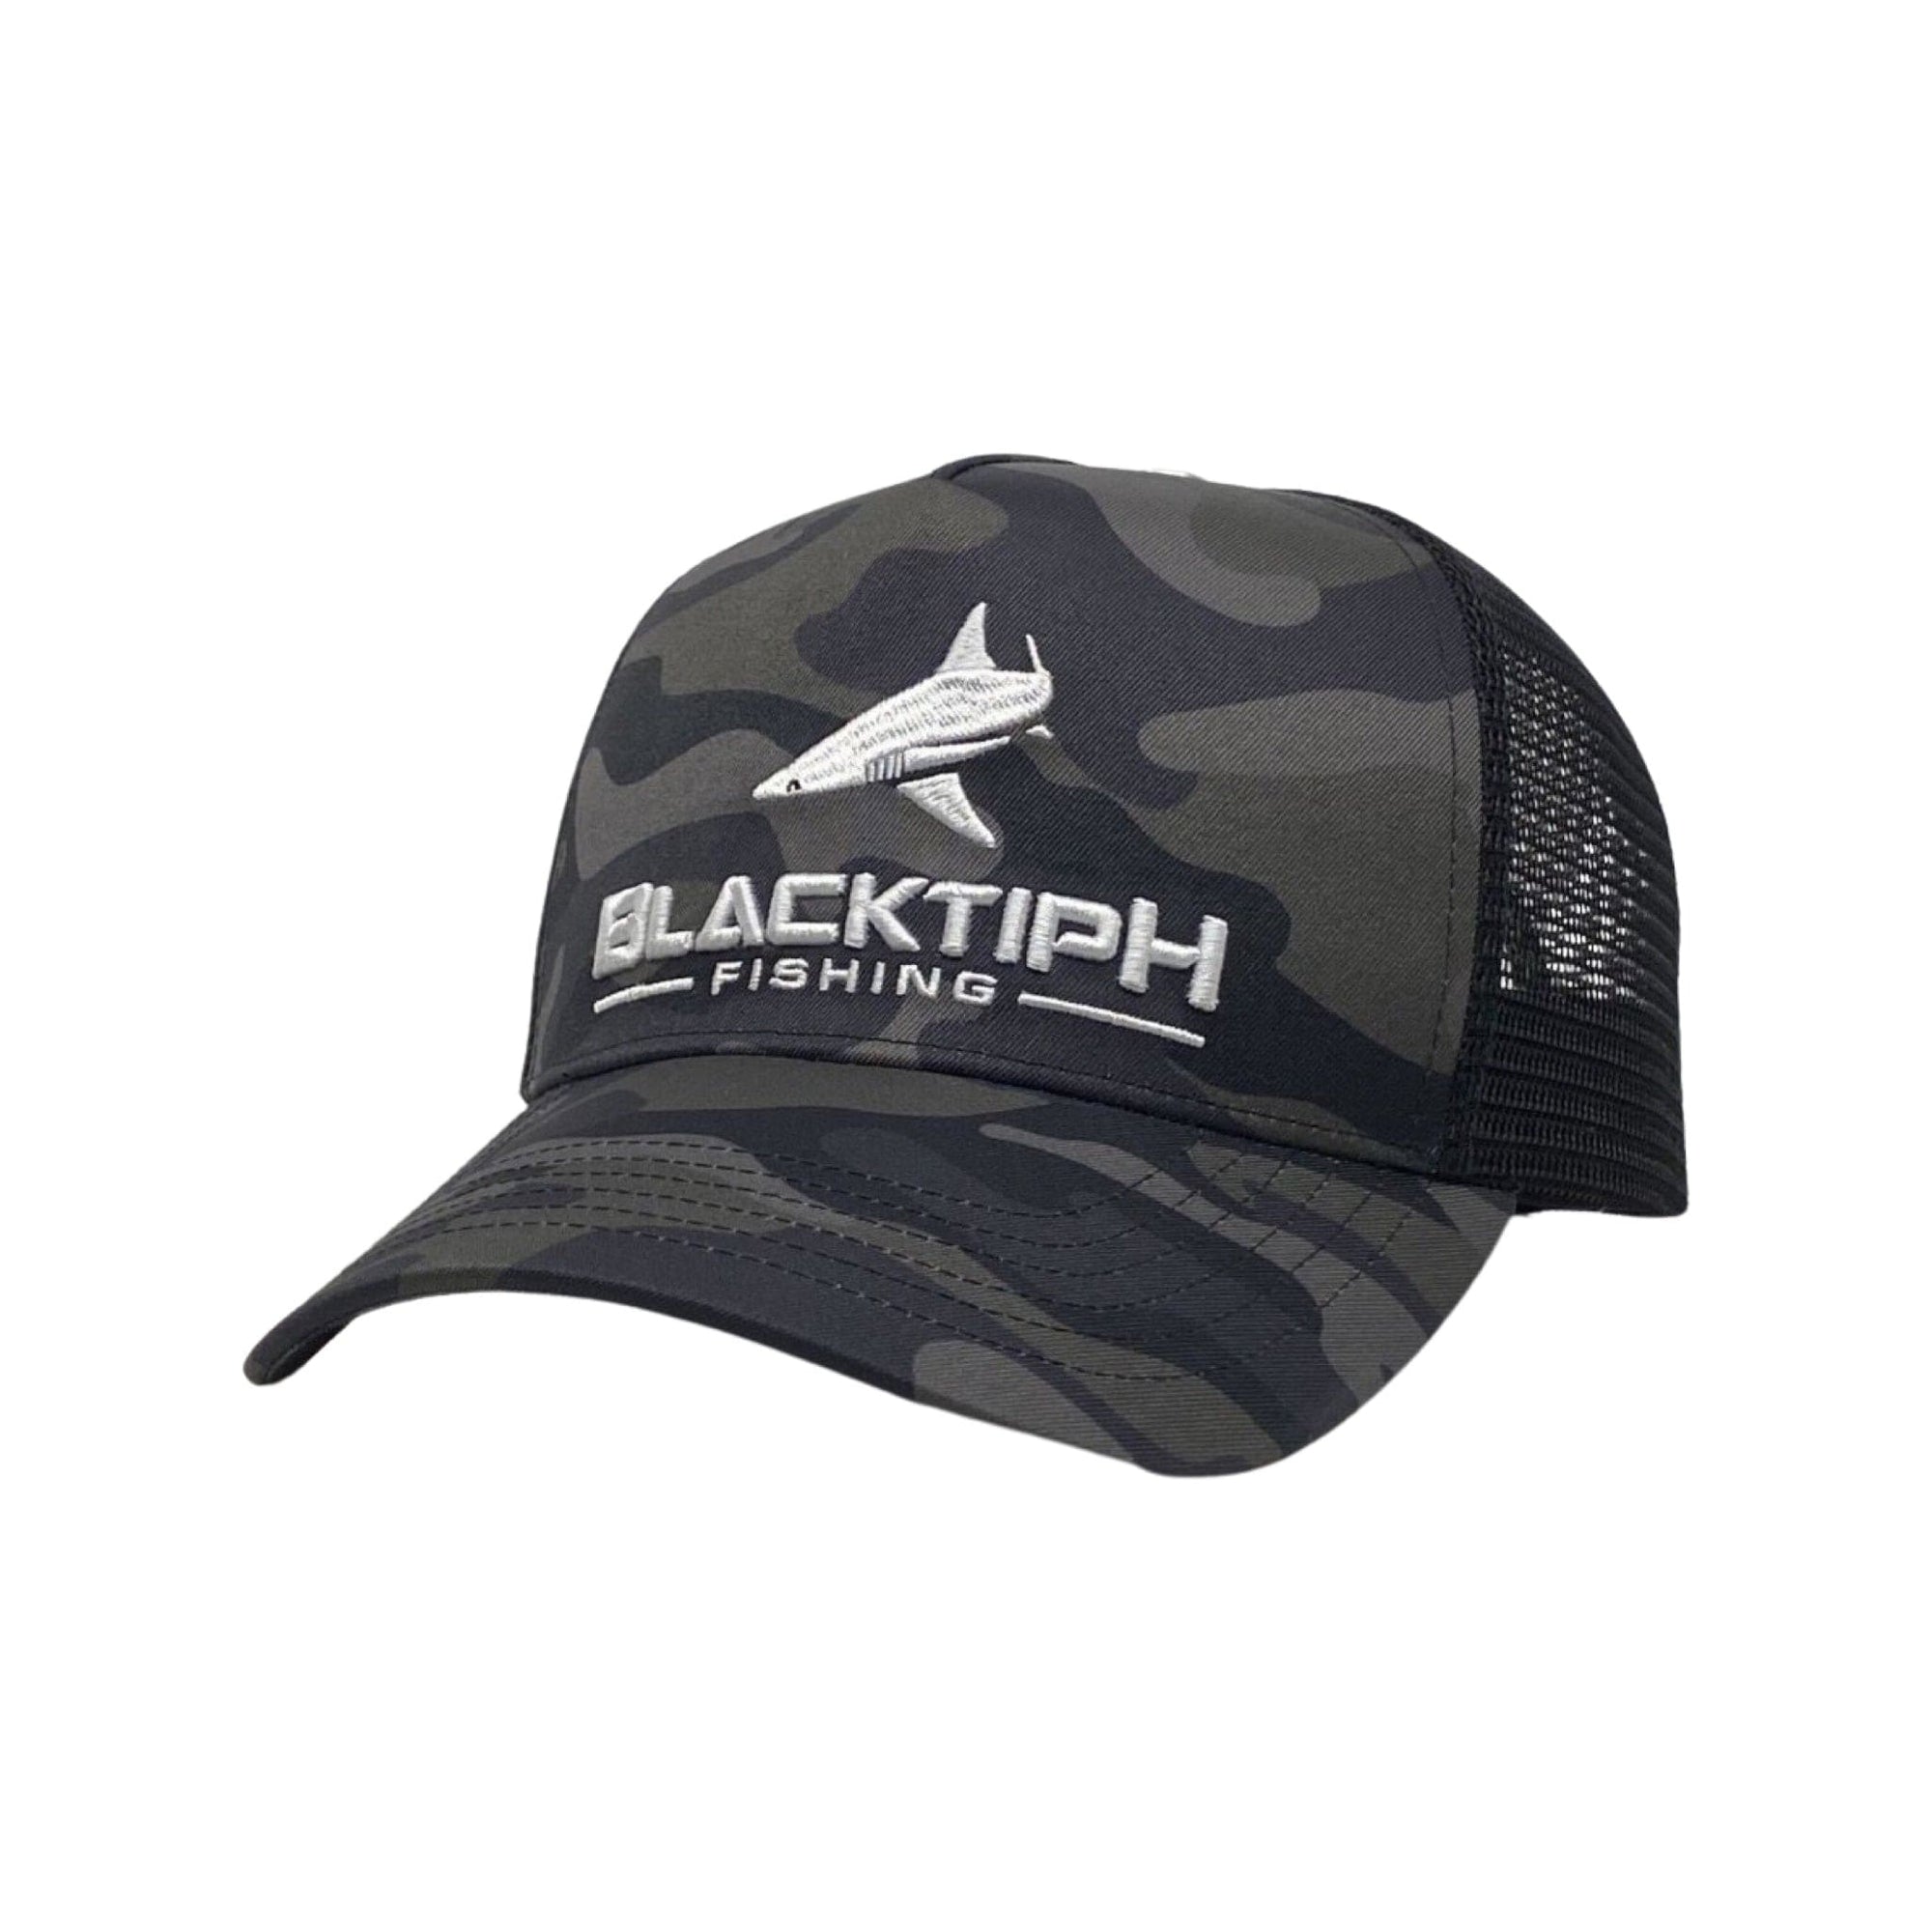 BlacktipH Hats BlacktipH Black Camo Embroidered Snapback 2.0